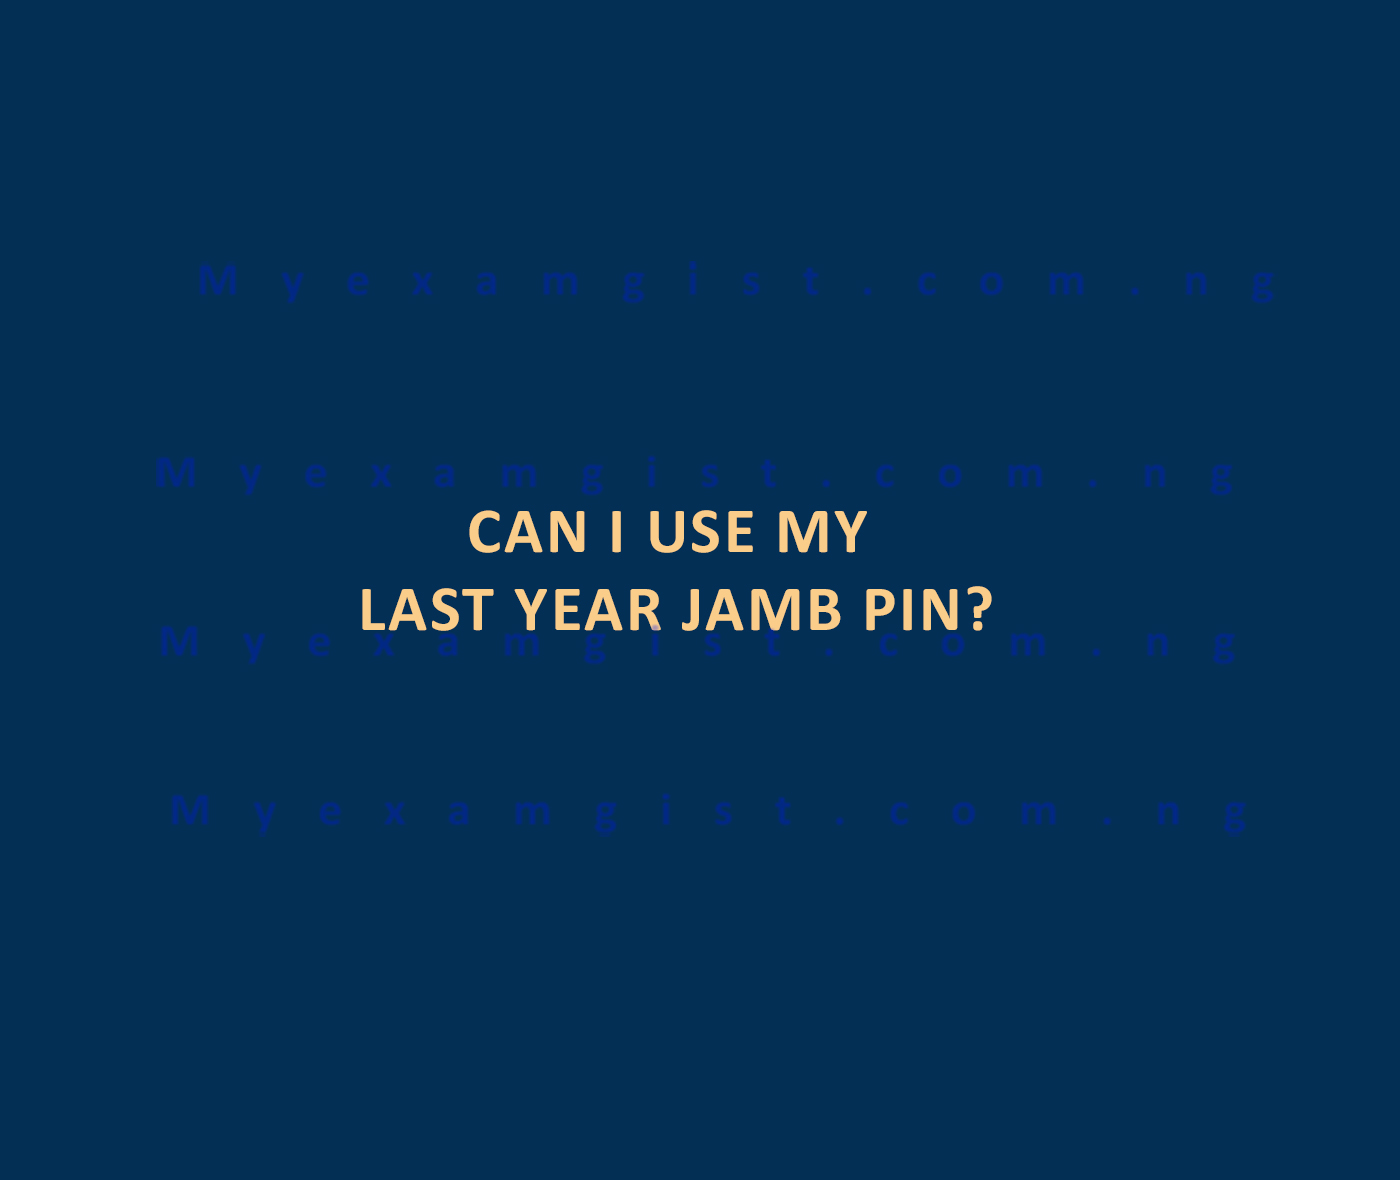 Can I use my last year JAMB pin?